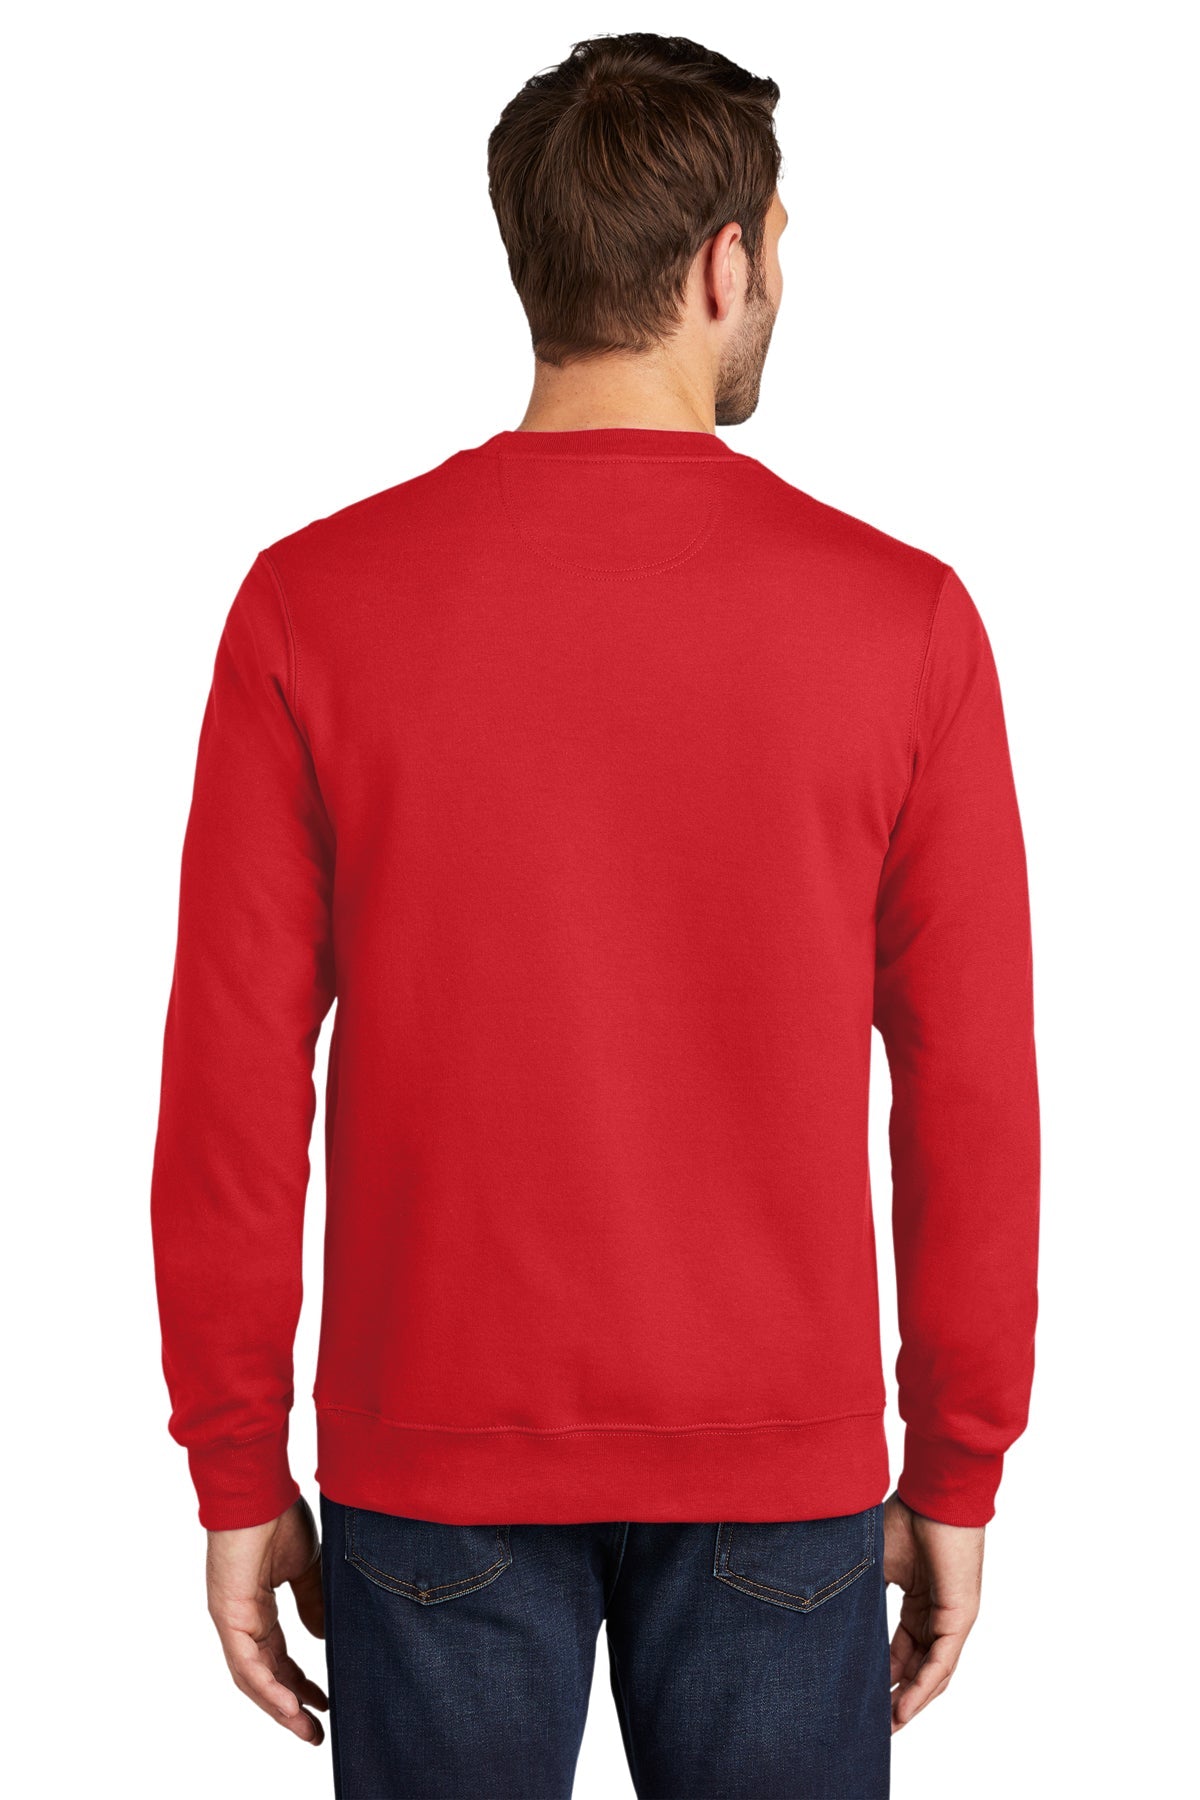 port & company_pc850 _bright red_company_logo_sweatshirts